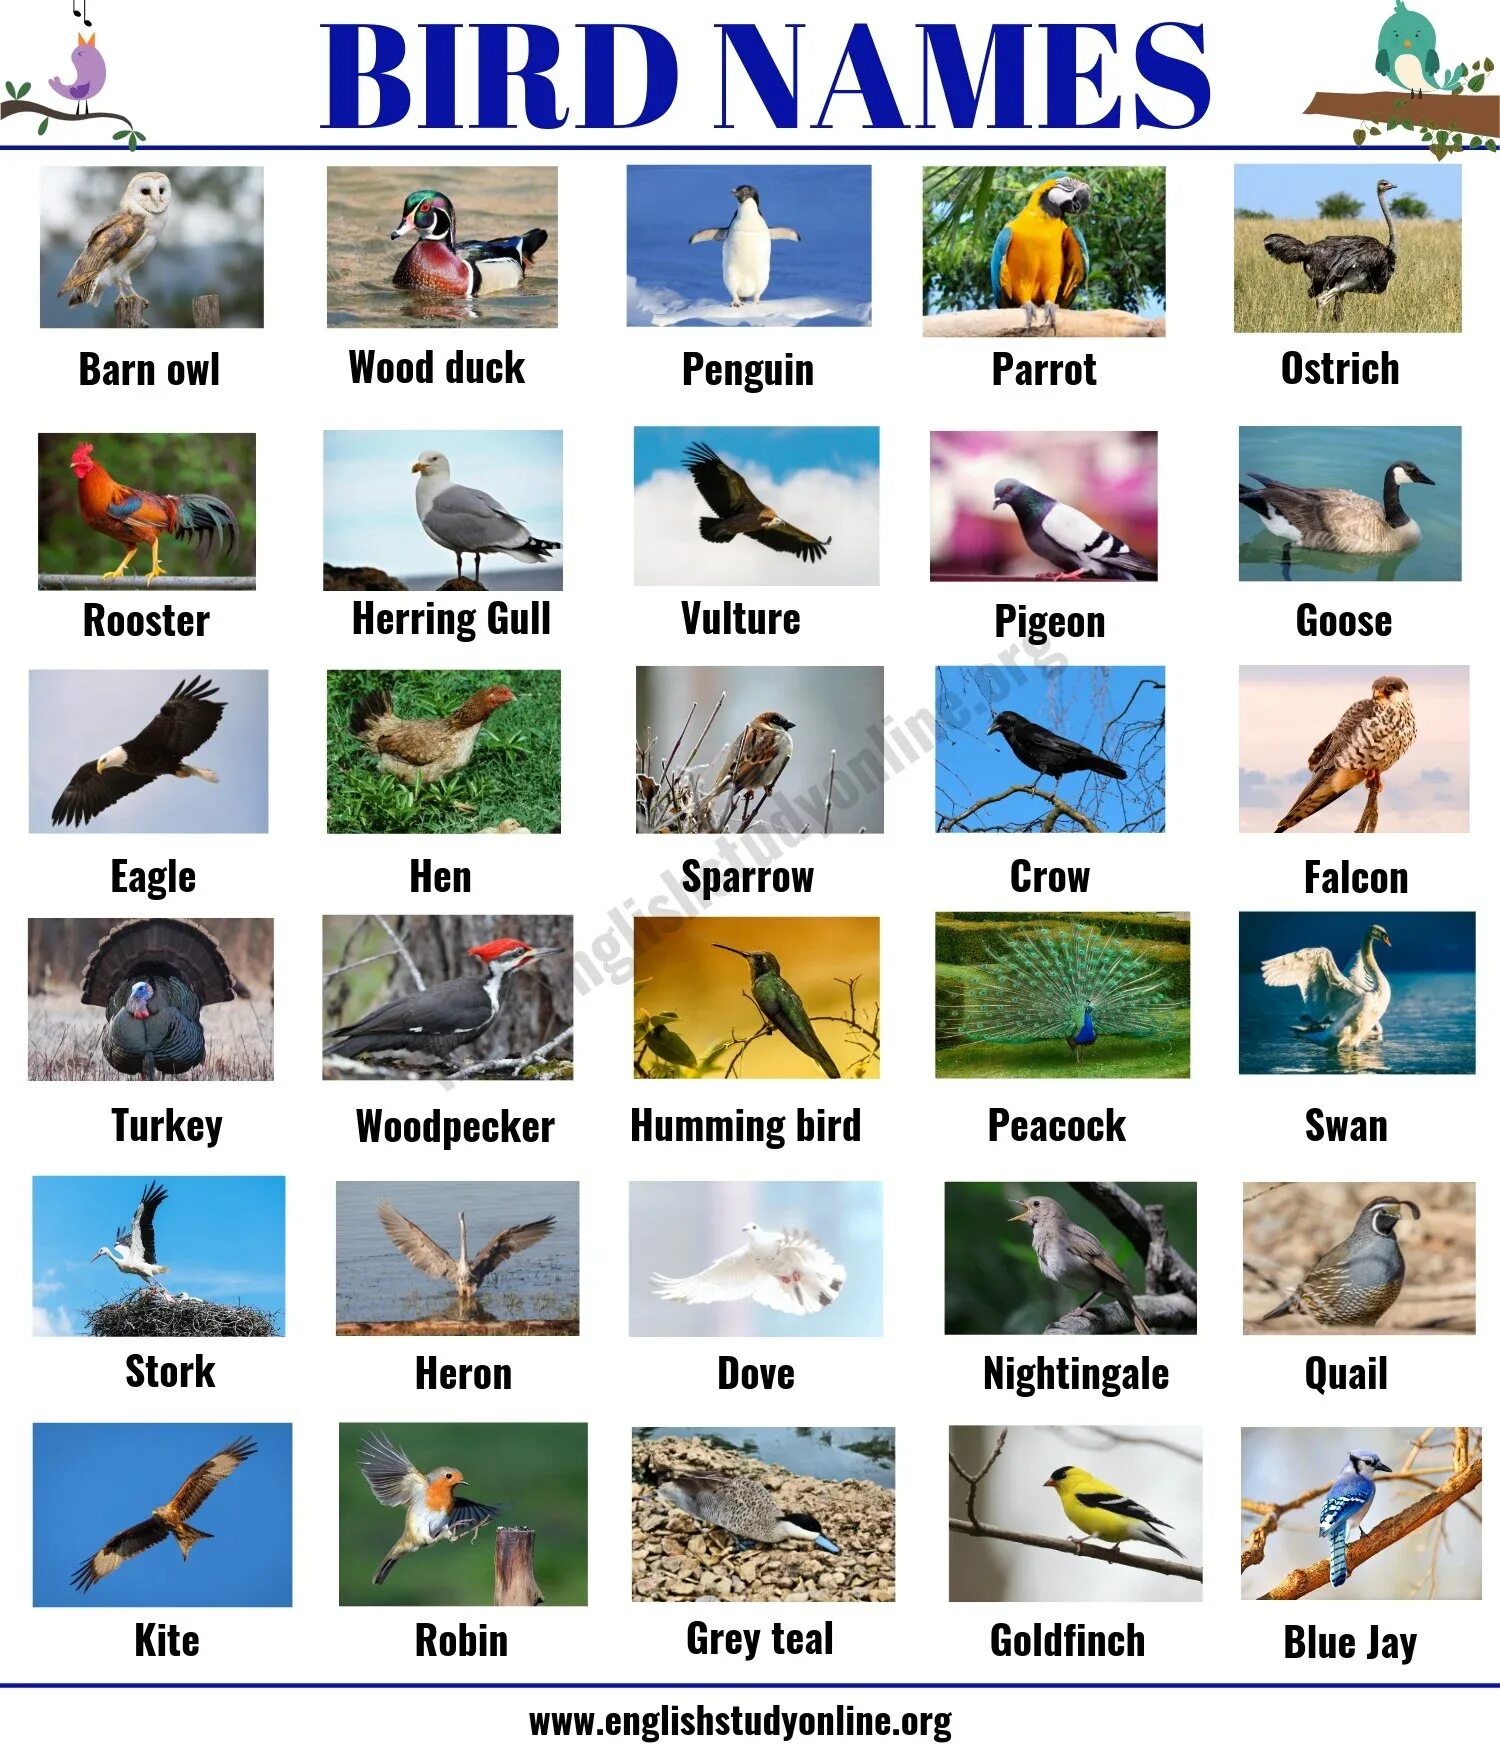 Kind birds. Птицы на английском. Названия птиц на английском. Названия птиц на англи. Птицы на английском для детей.